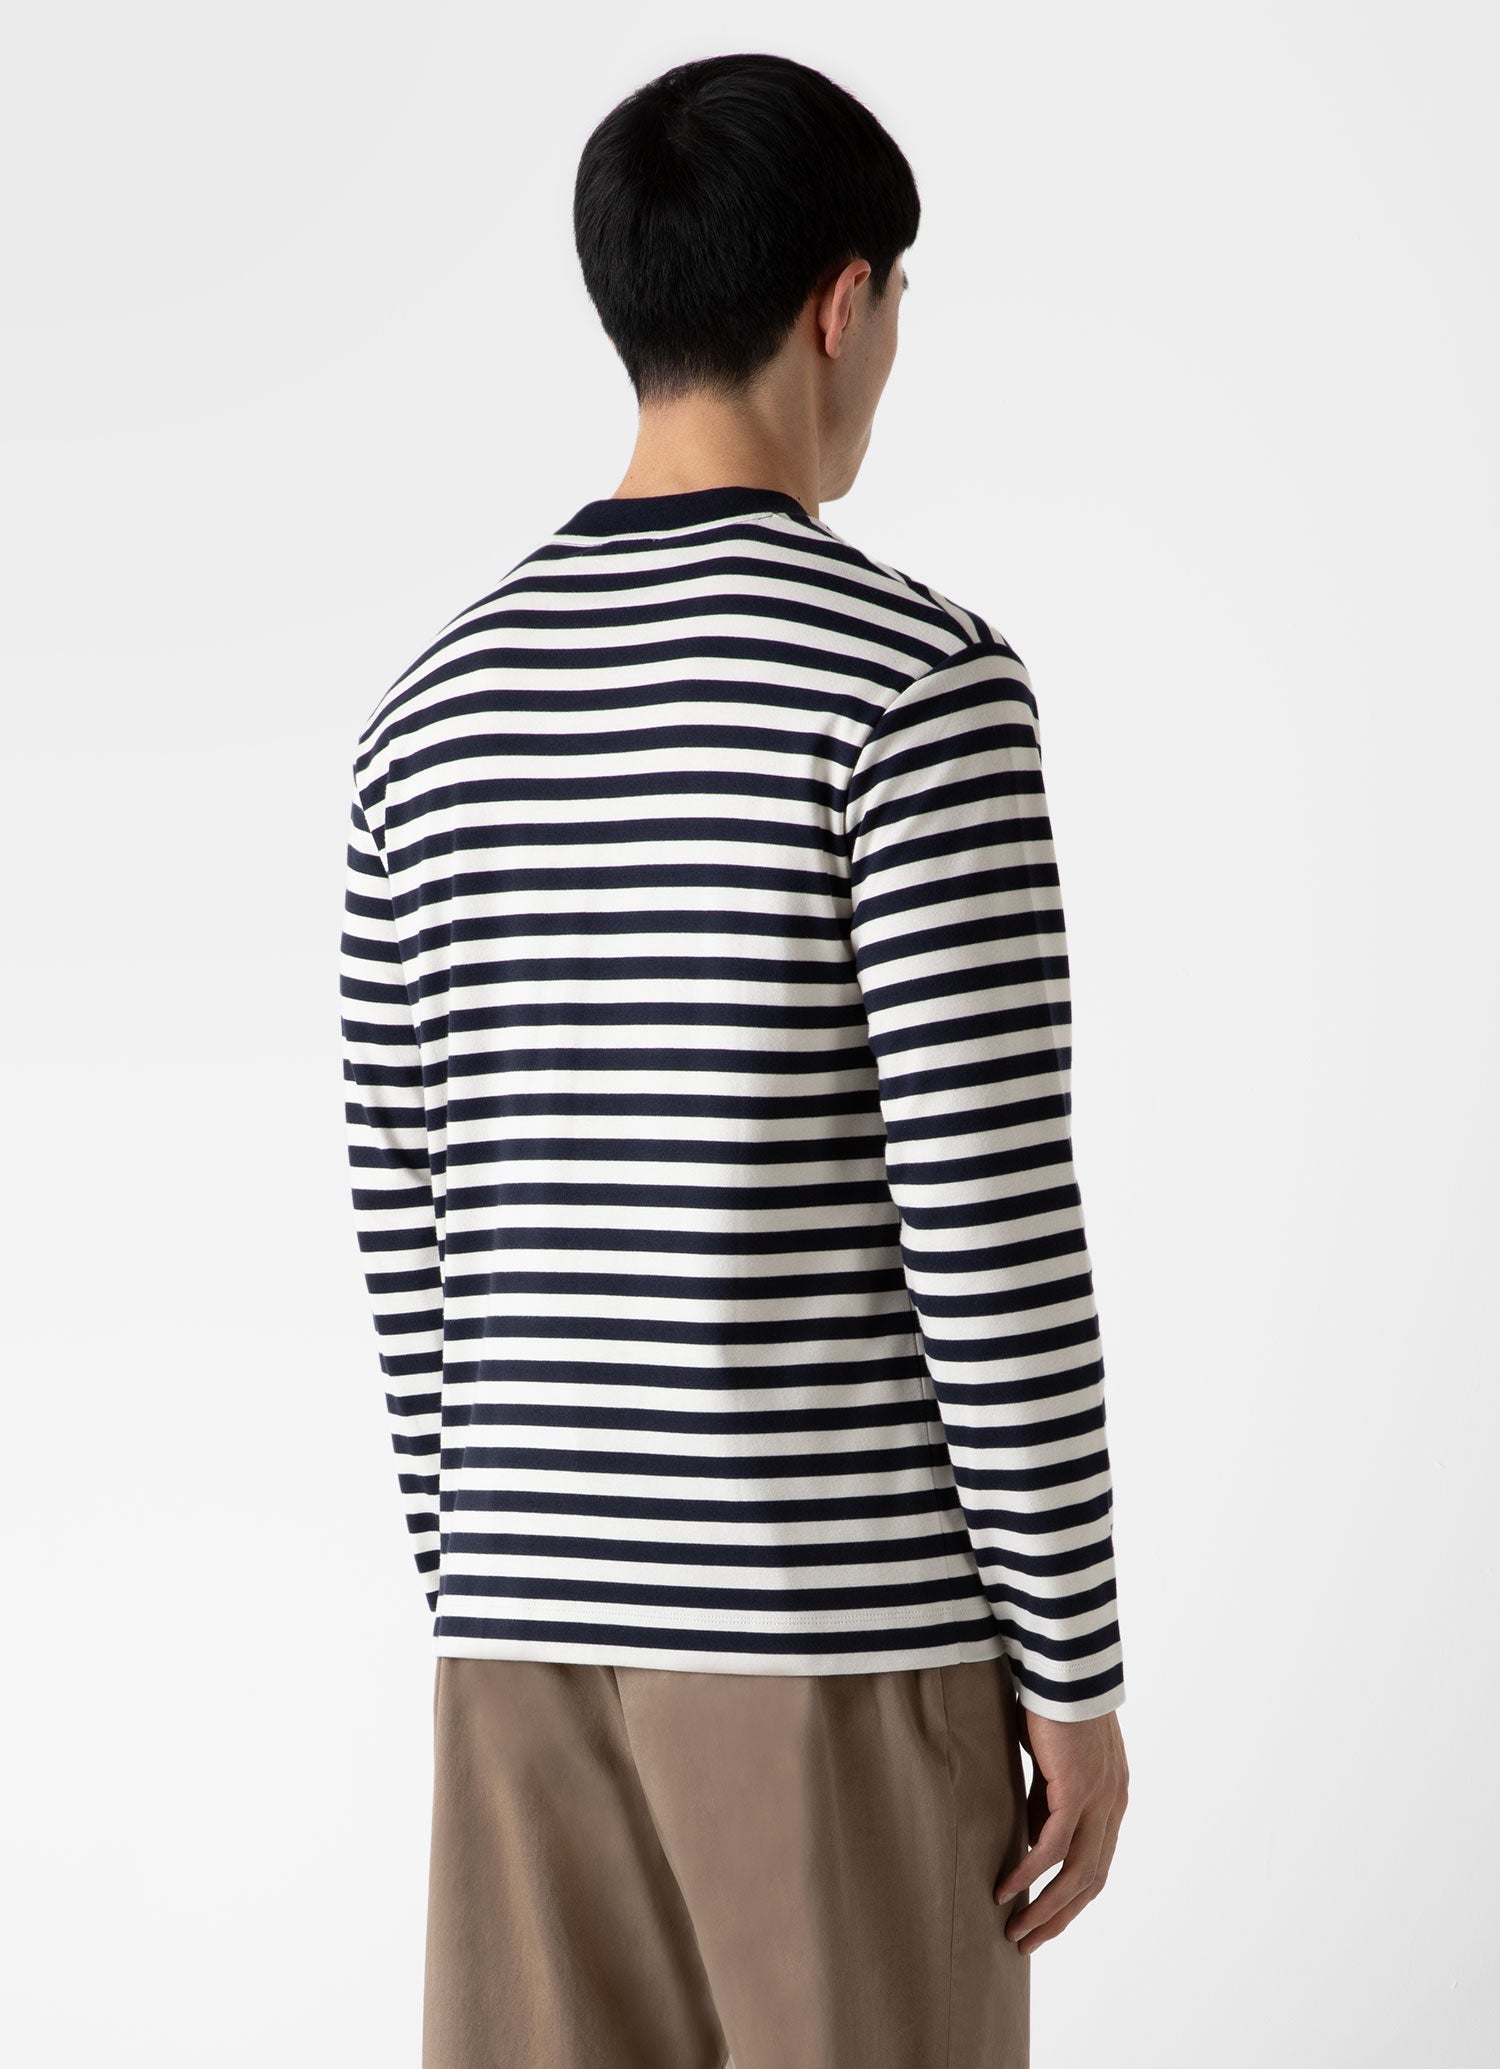 Men's Brushed Cotton Long Sleeve T-shirt in Navy/Ecru Block Stripe